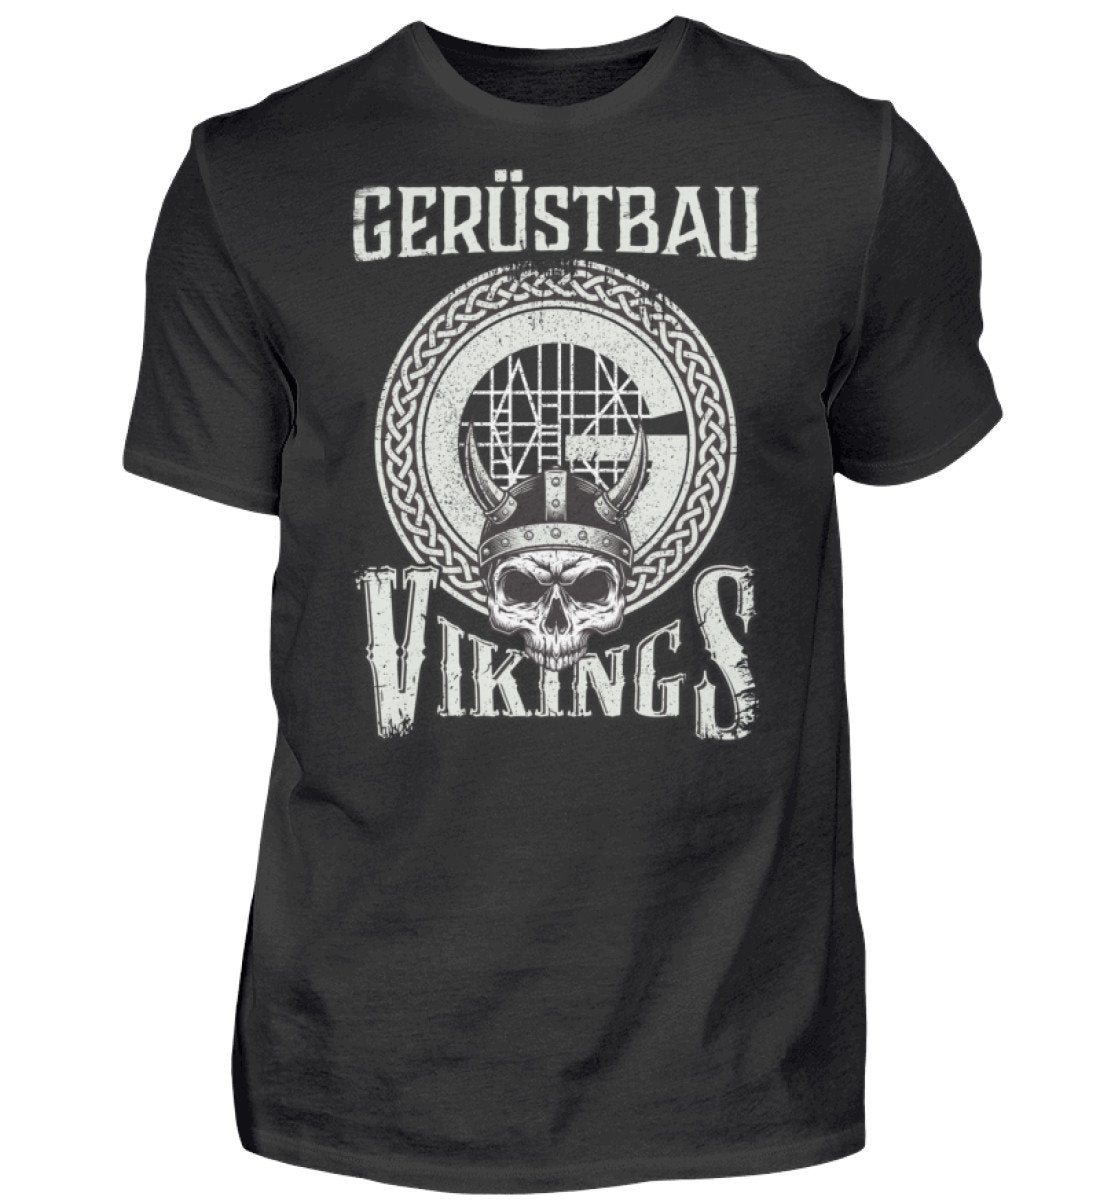 Gerüstbauer Shirt / Gerüstbau Vikings €24.95 Gerüstbauer - Shop >>